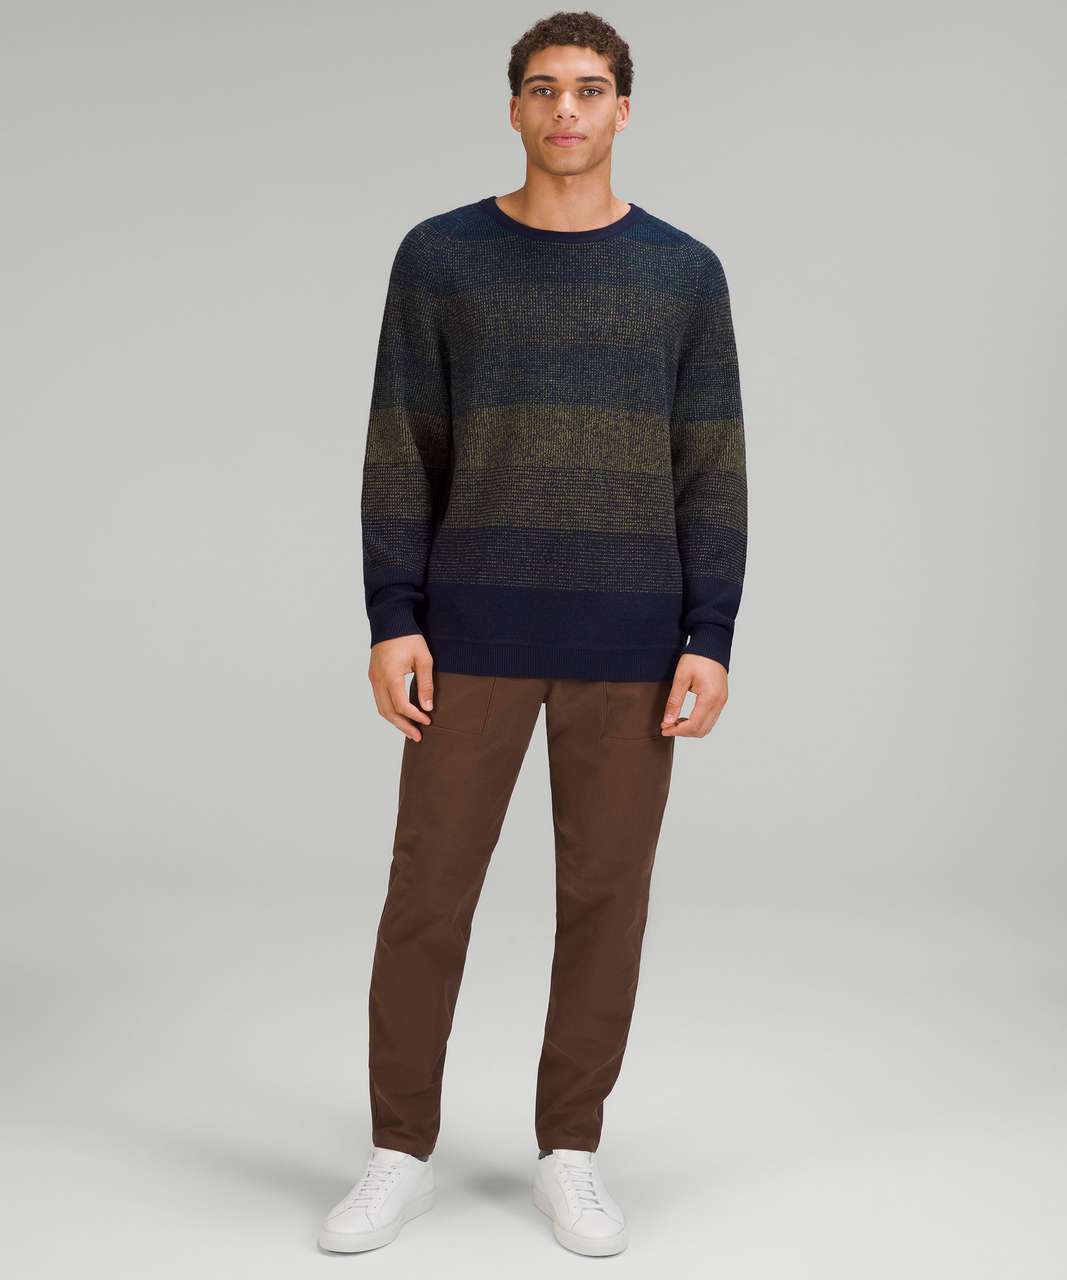 Lululemon Textured Knit Crewneck Sweater - Heathered True Navy / Heathered Golden Sand / Heathered Green Jasper